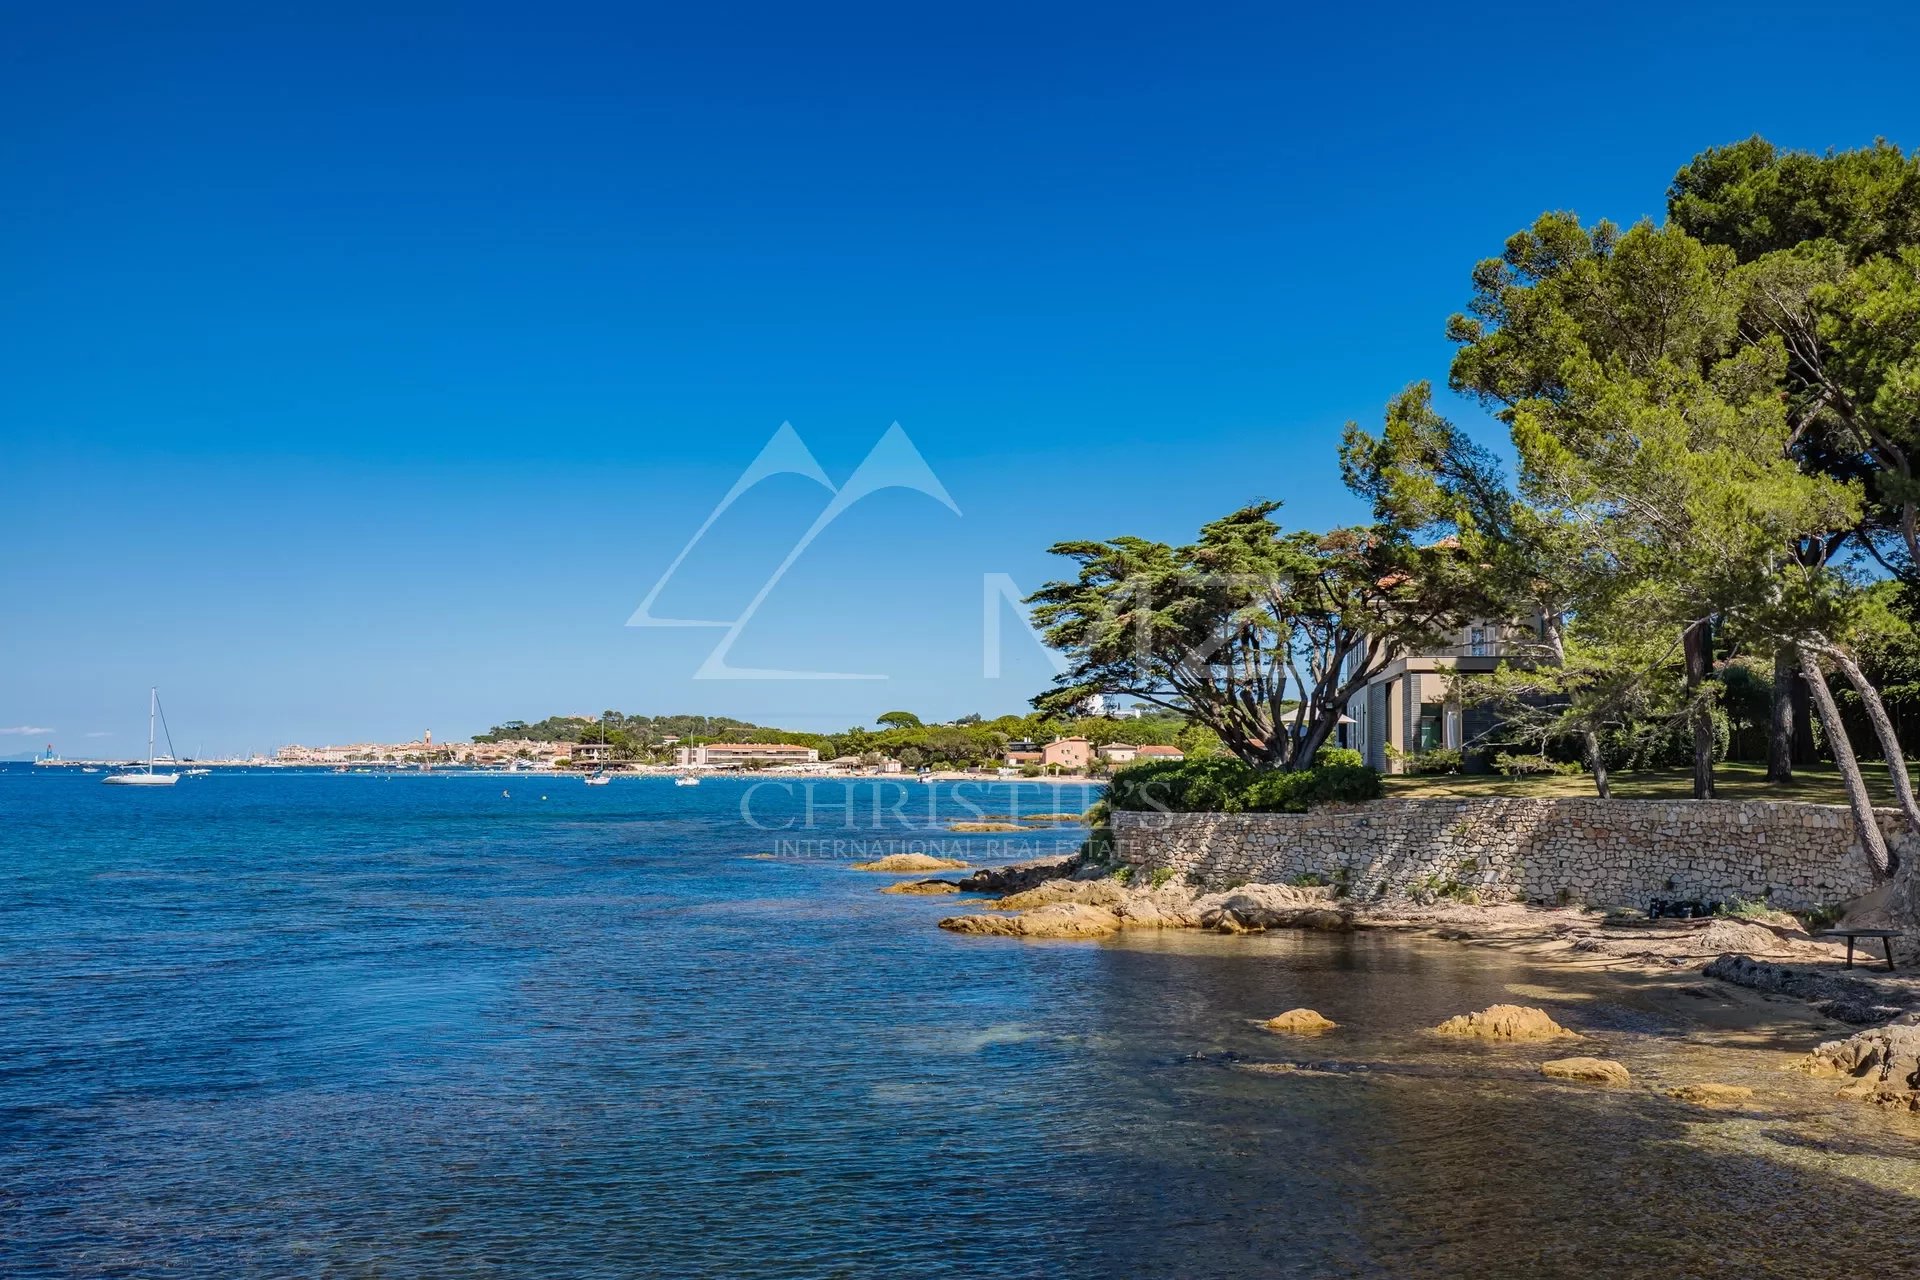 Close to Saint-Tropez - Waterfront property